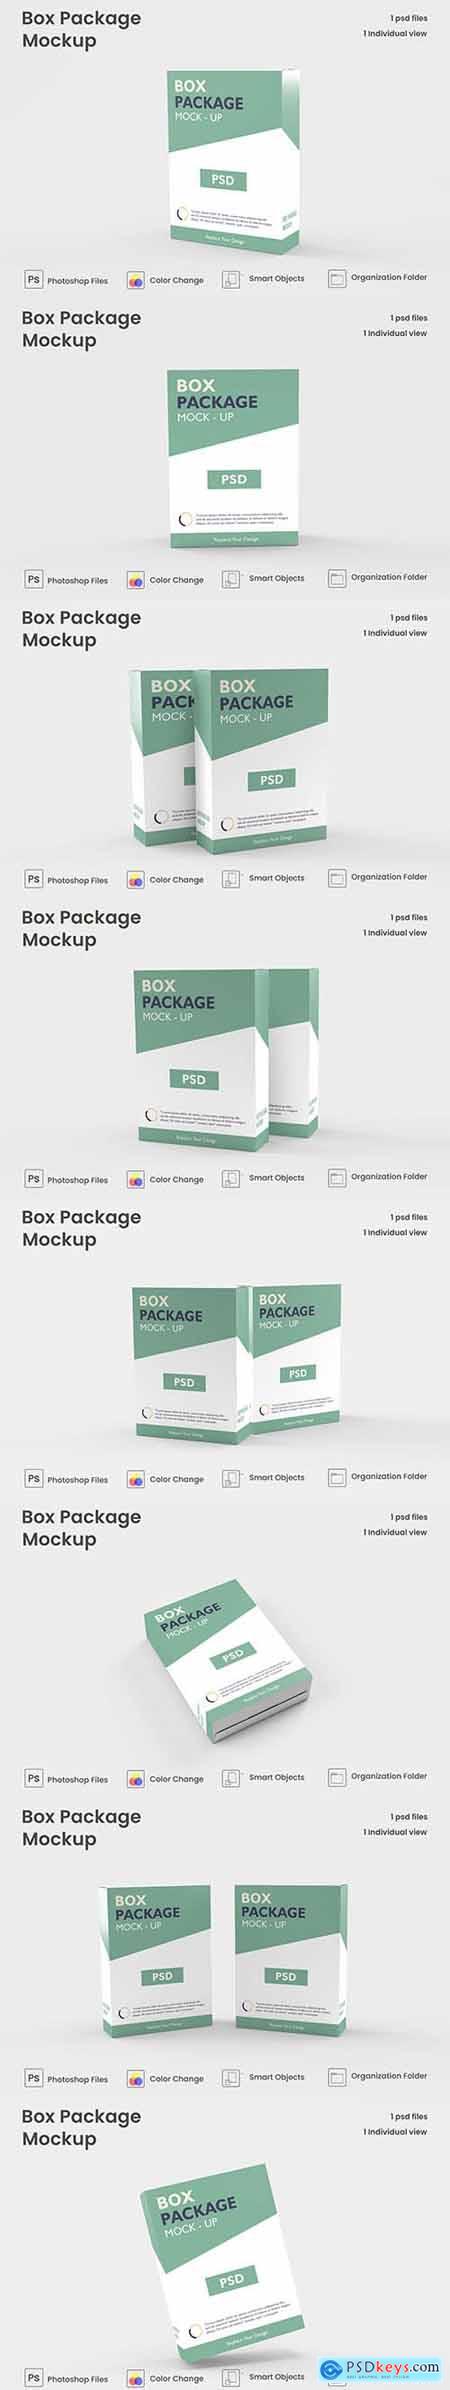 Paper box packaging mockup